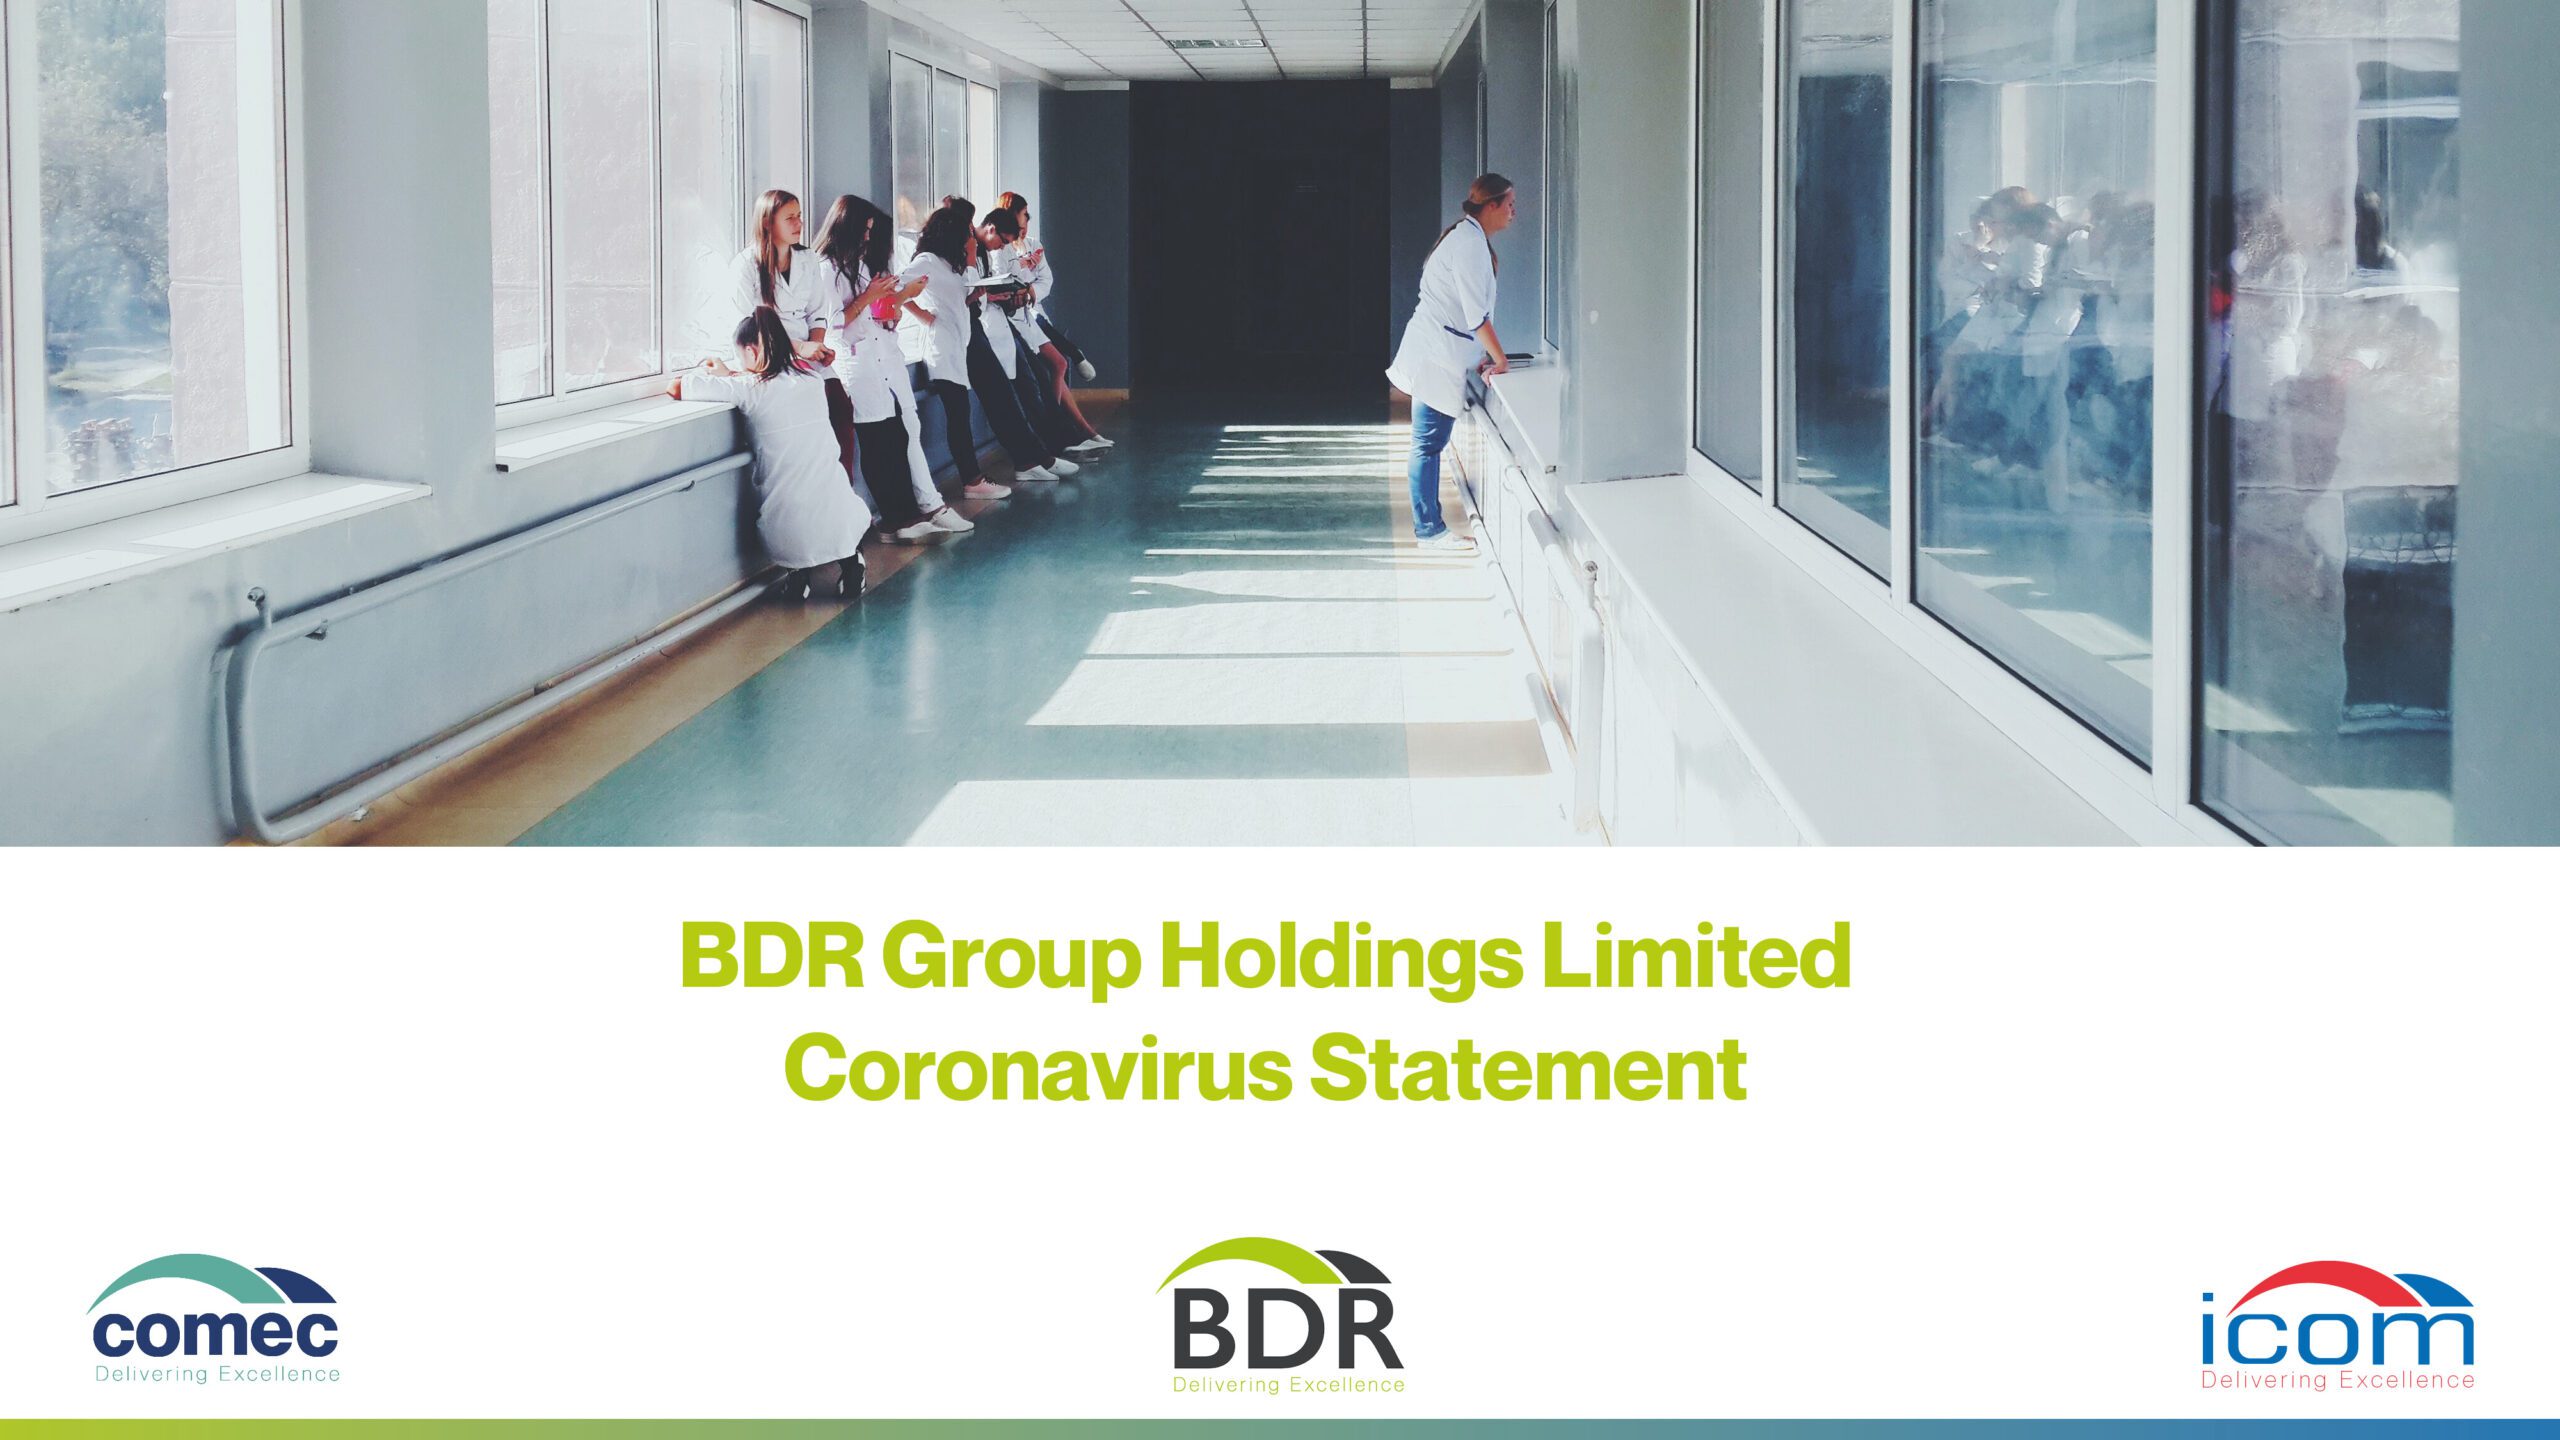 coronavirus, bdr group holdings limited coronavirus statement, bdr, comec, icom